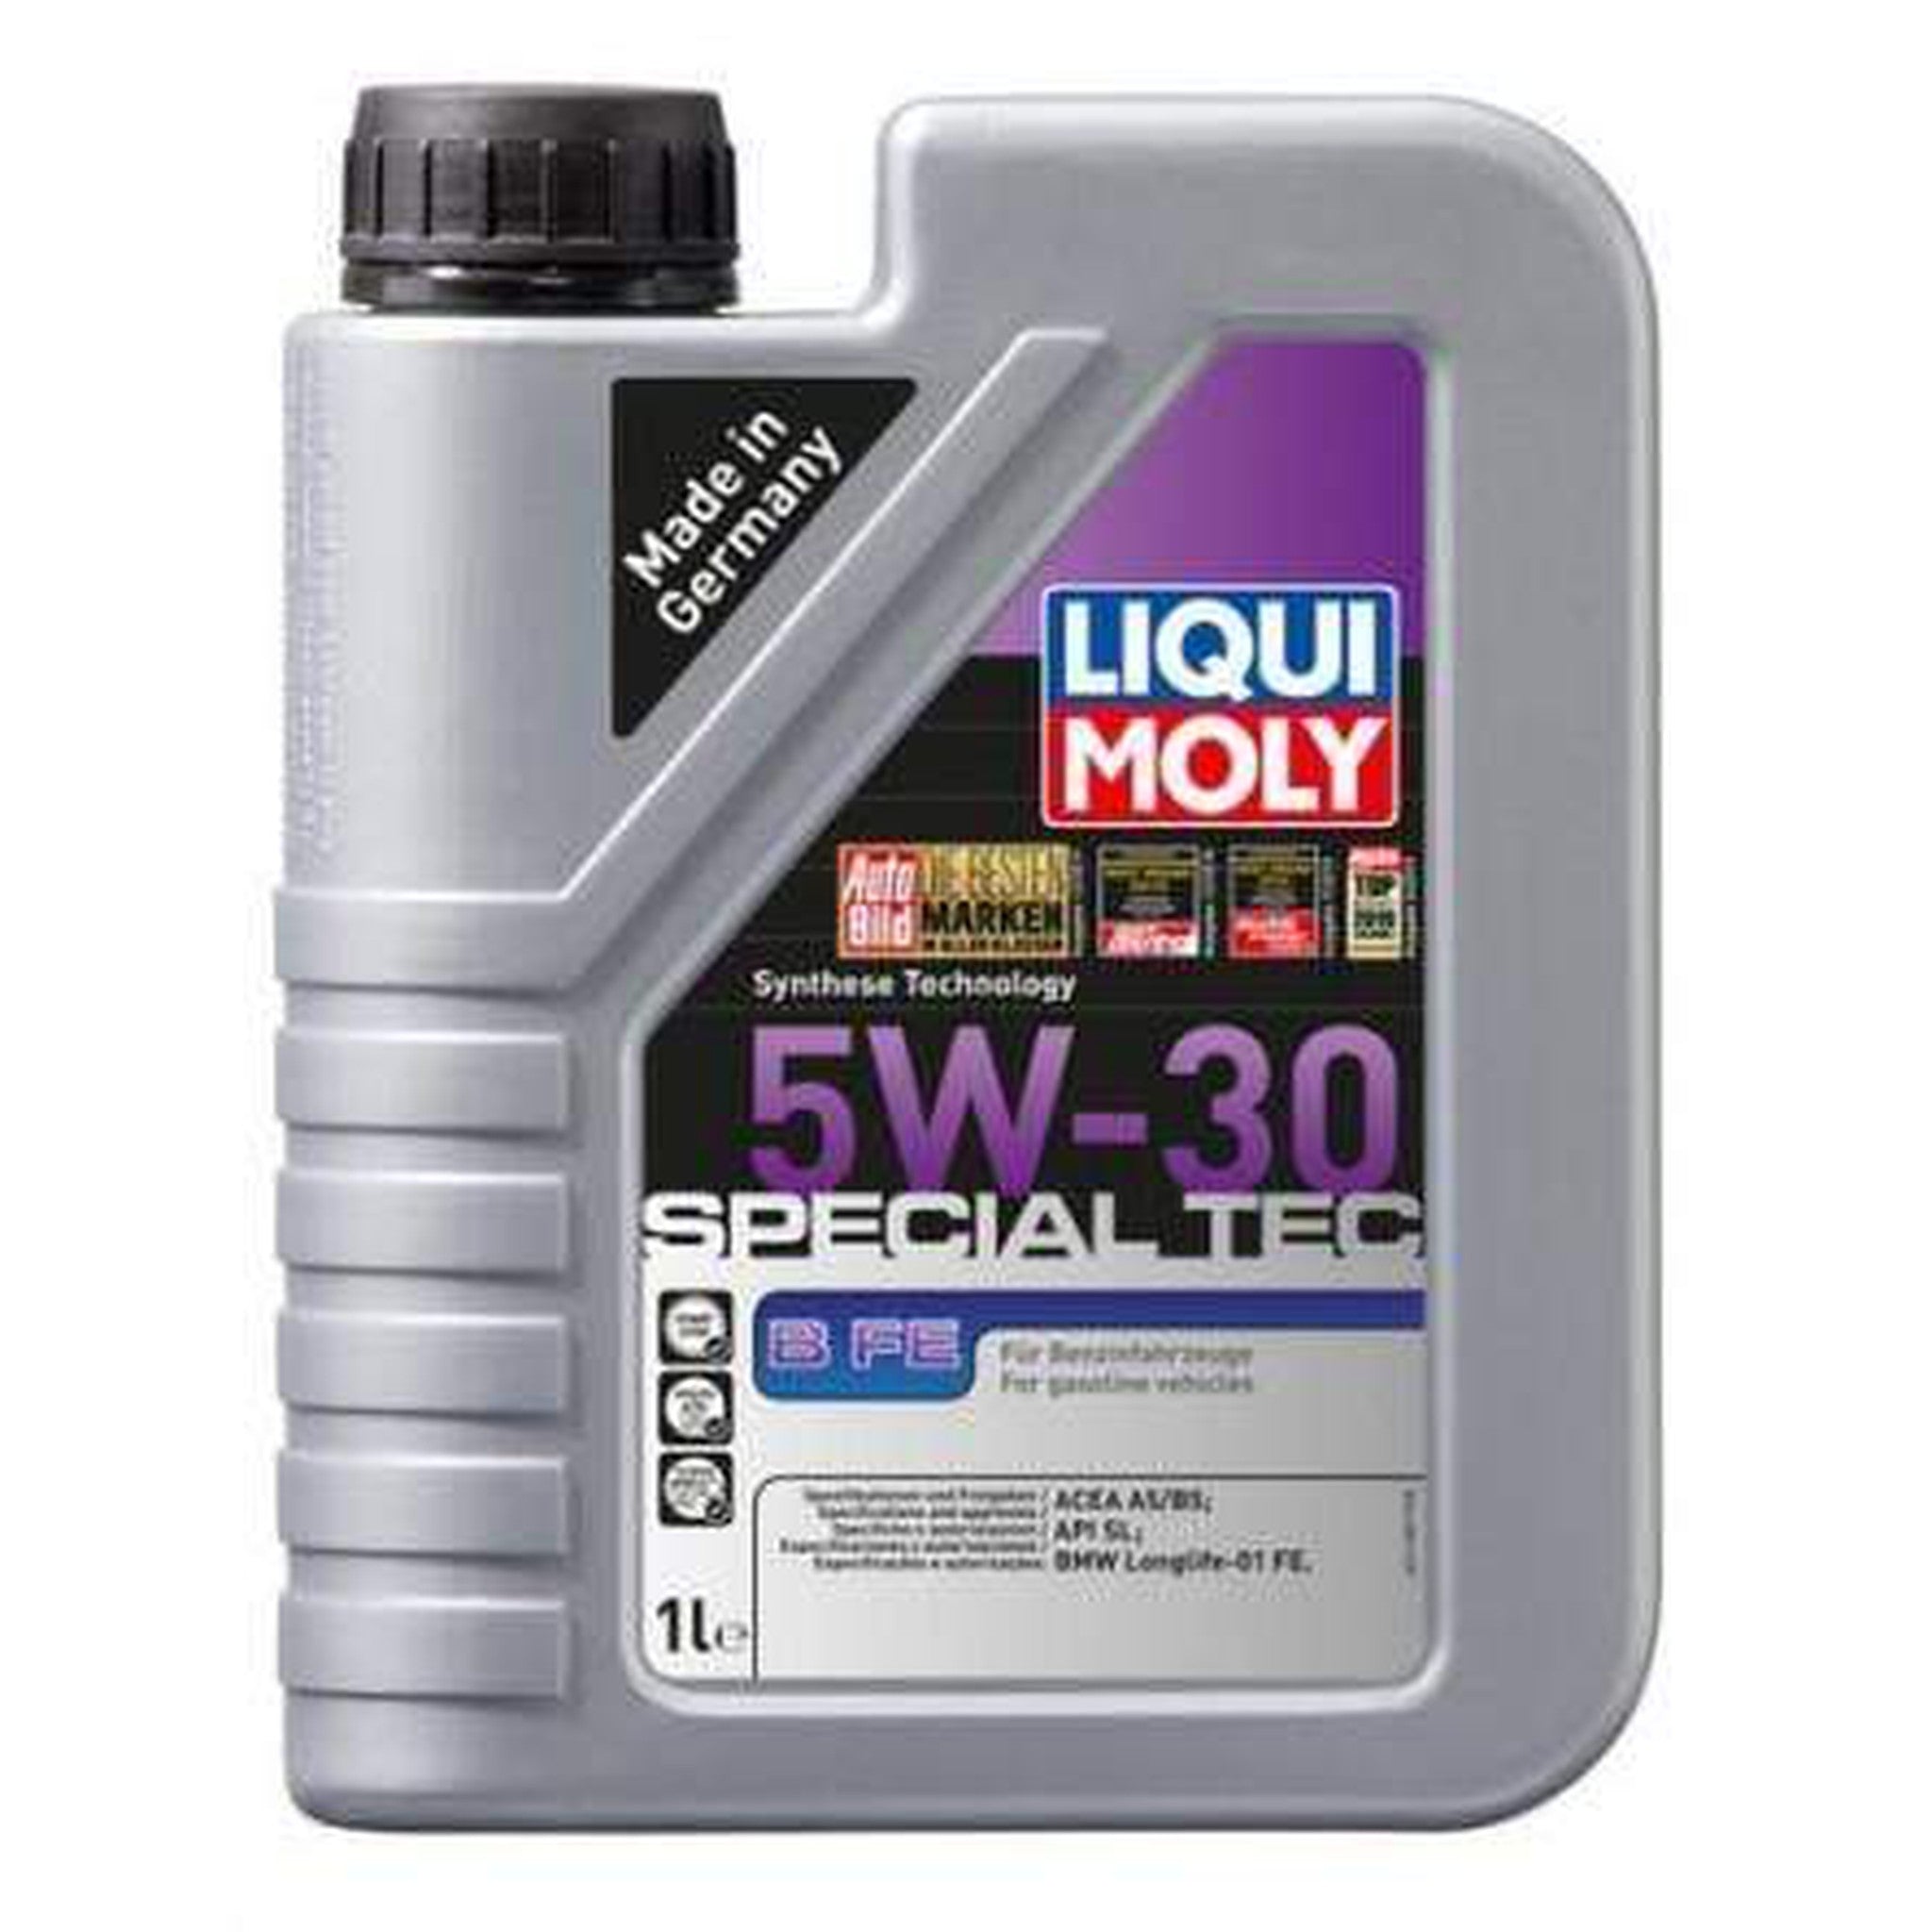 Motul Specific LL-01 FE 109371 Engine Oil; 5W-30 Synthetic; 5 Liter - BMW,  Mini